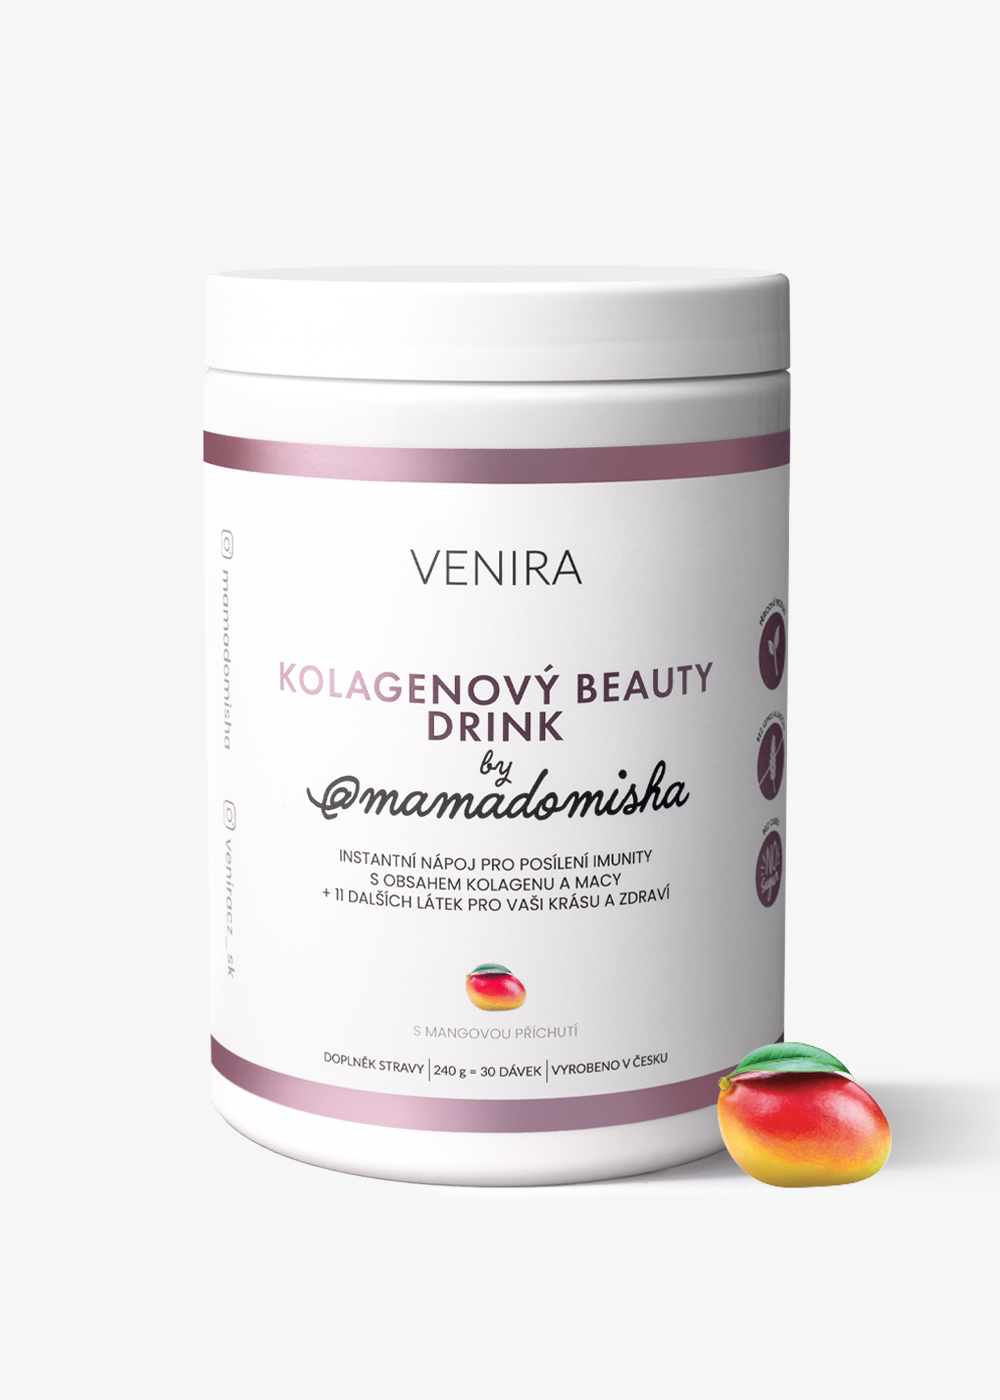 VENIRA kolagenový beauty drink by @mamadomisha, mango, 240 g